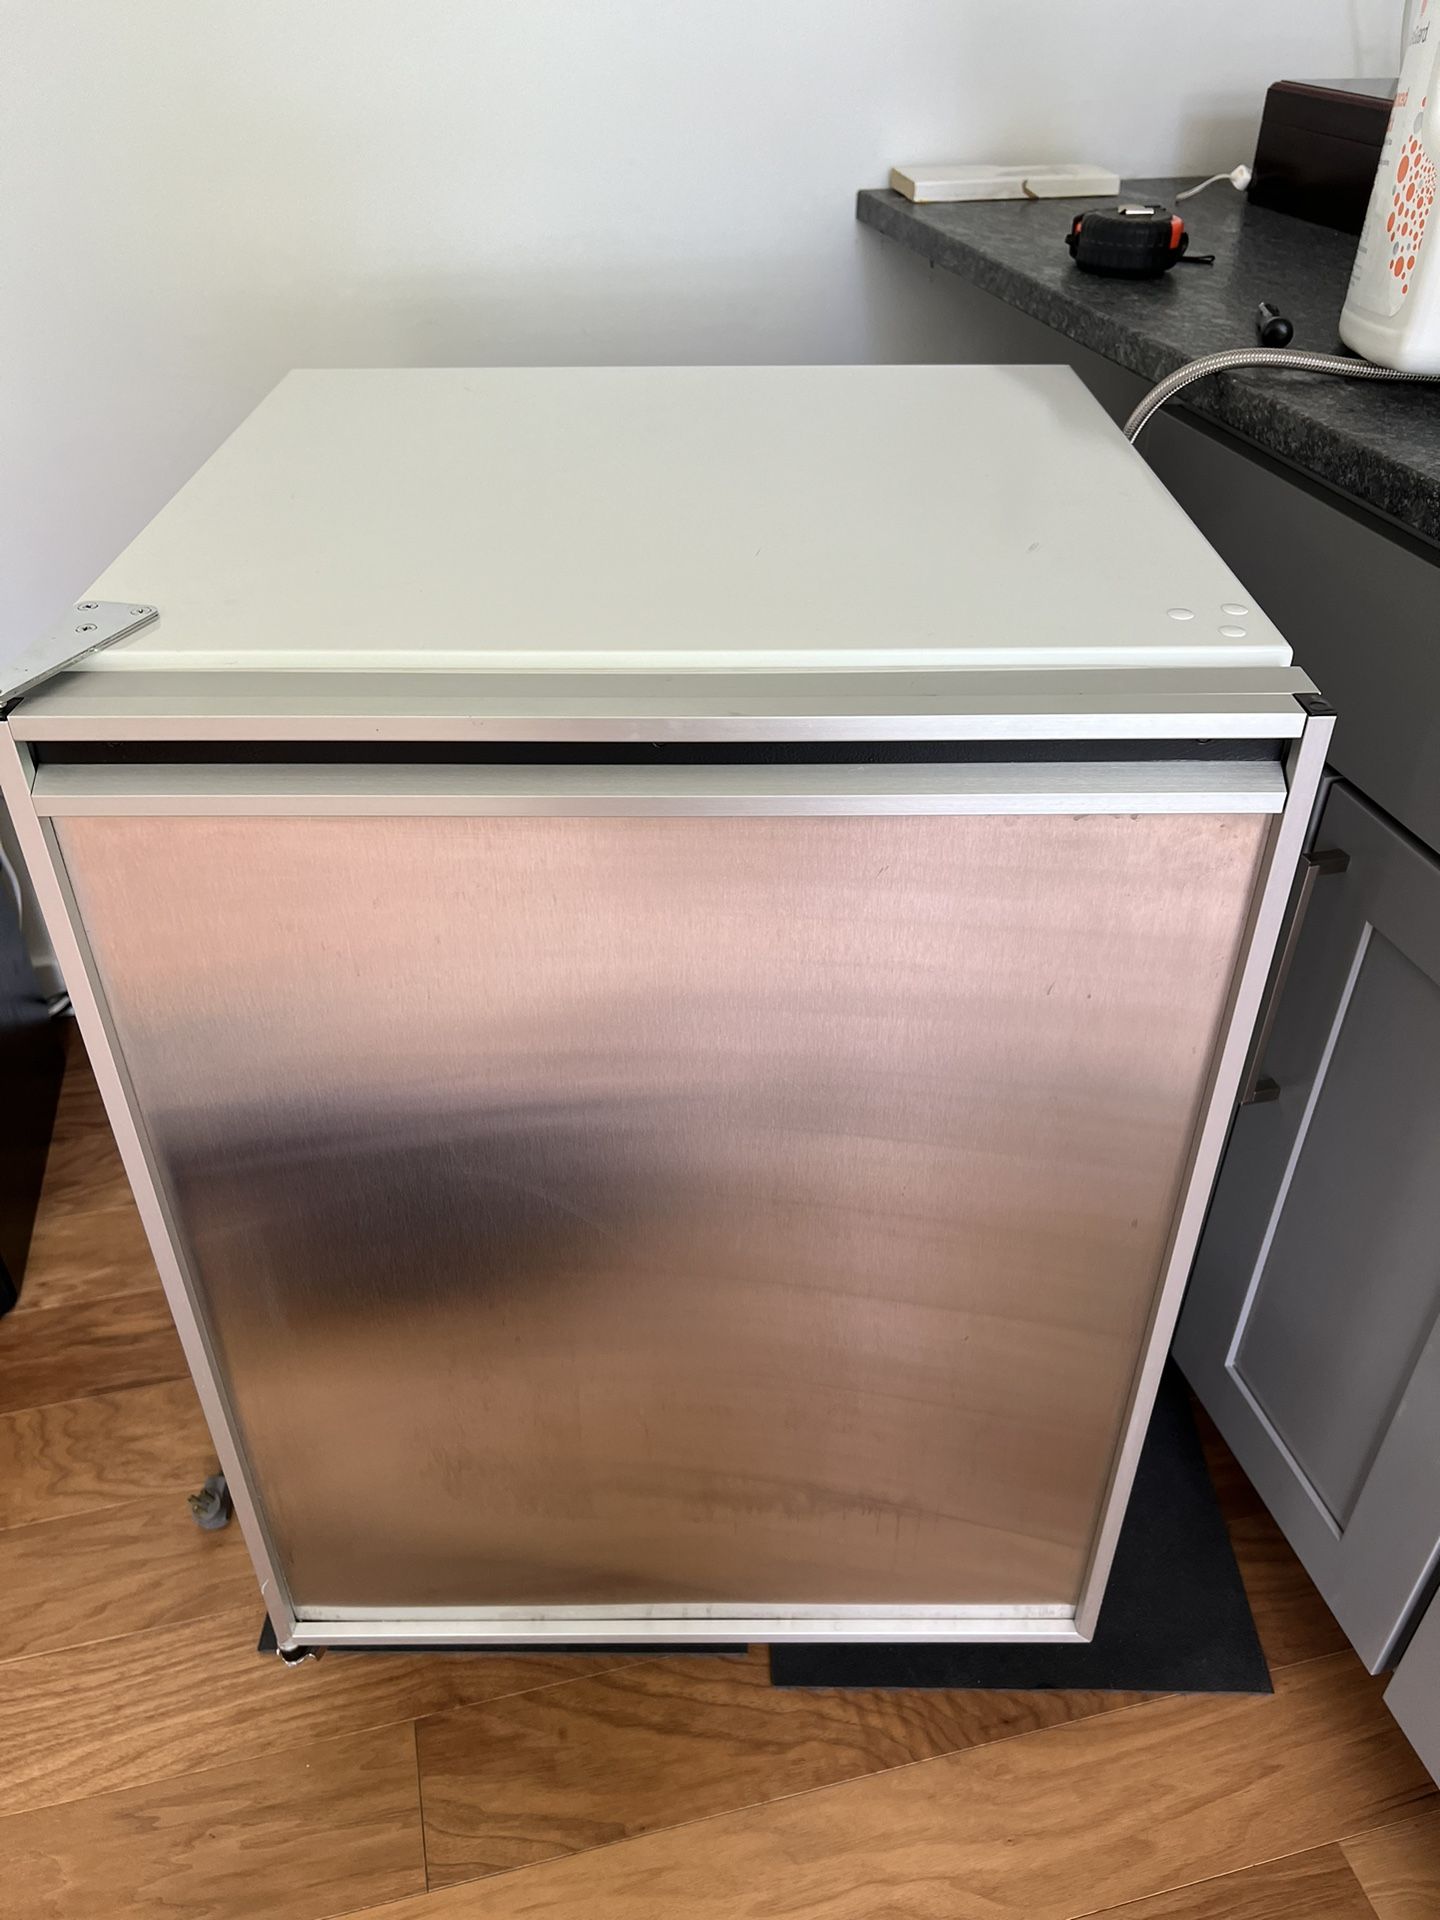 Sub Zero Under Counter Refrigerator With Freezer And Ice Maker 